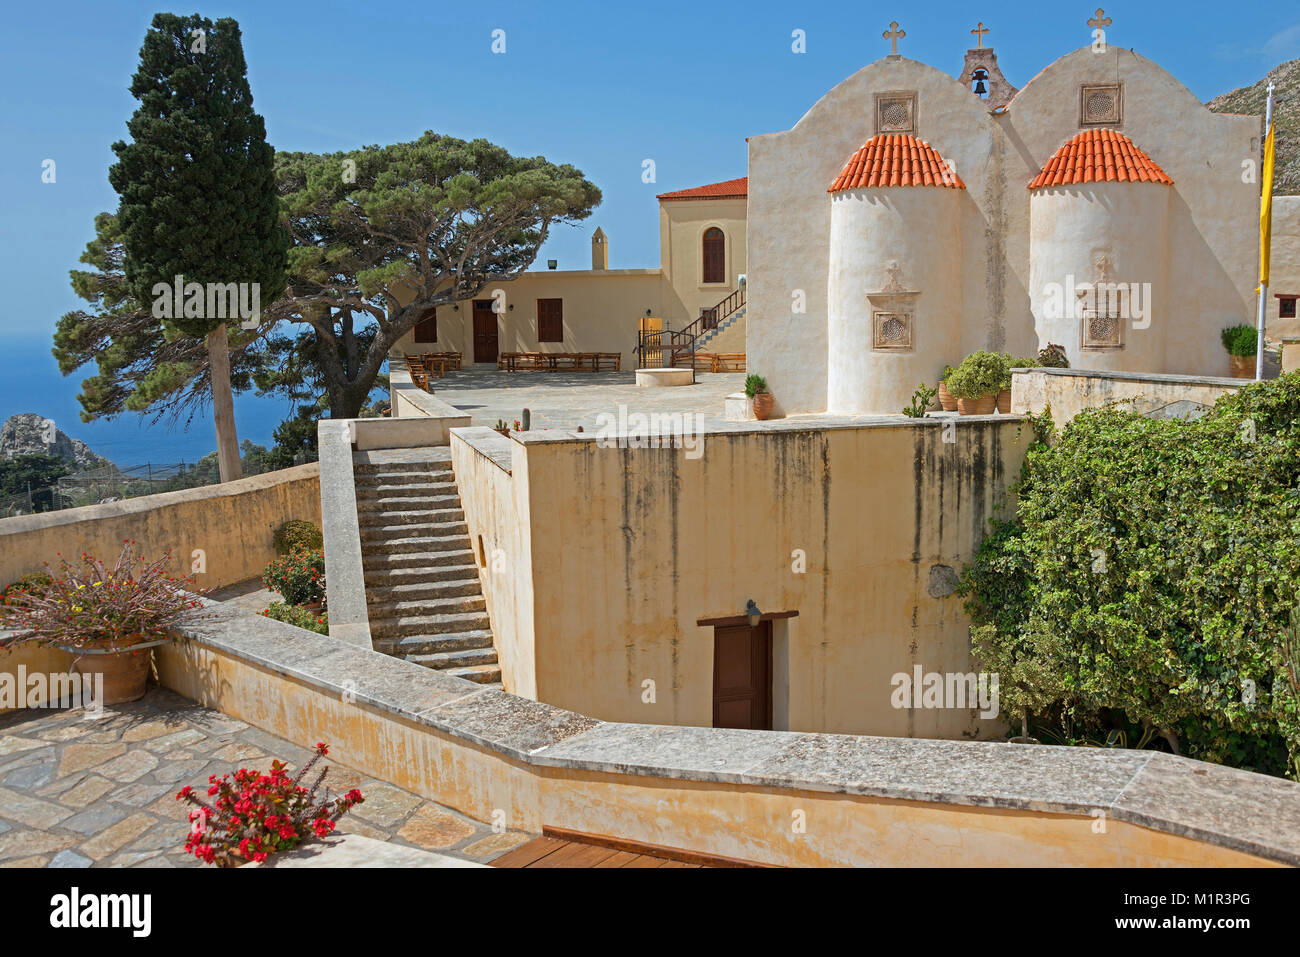 Kloster Preveli, Gemeinde Agios Vasilios, Kreta, Griechenland Mönchskloster, Moenchskloster, Piso Moni Preveli Foto Stock